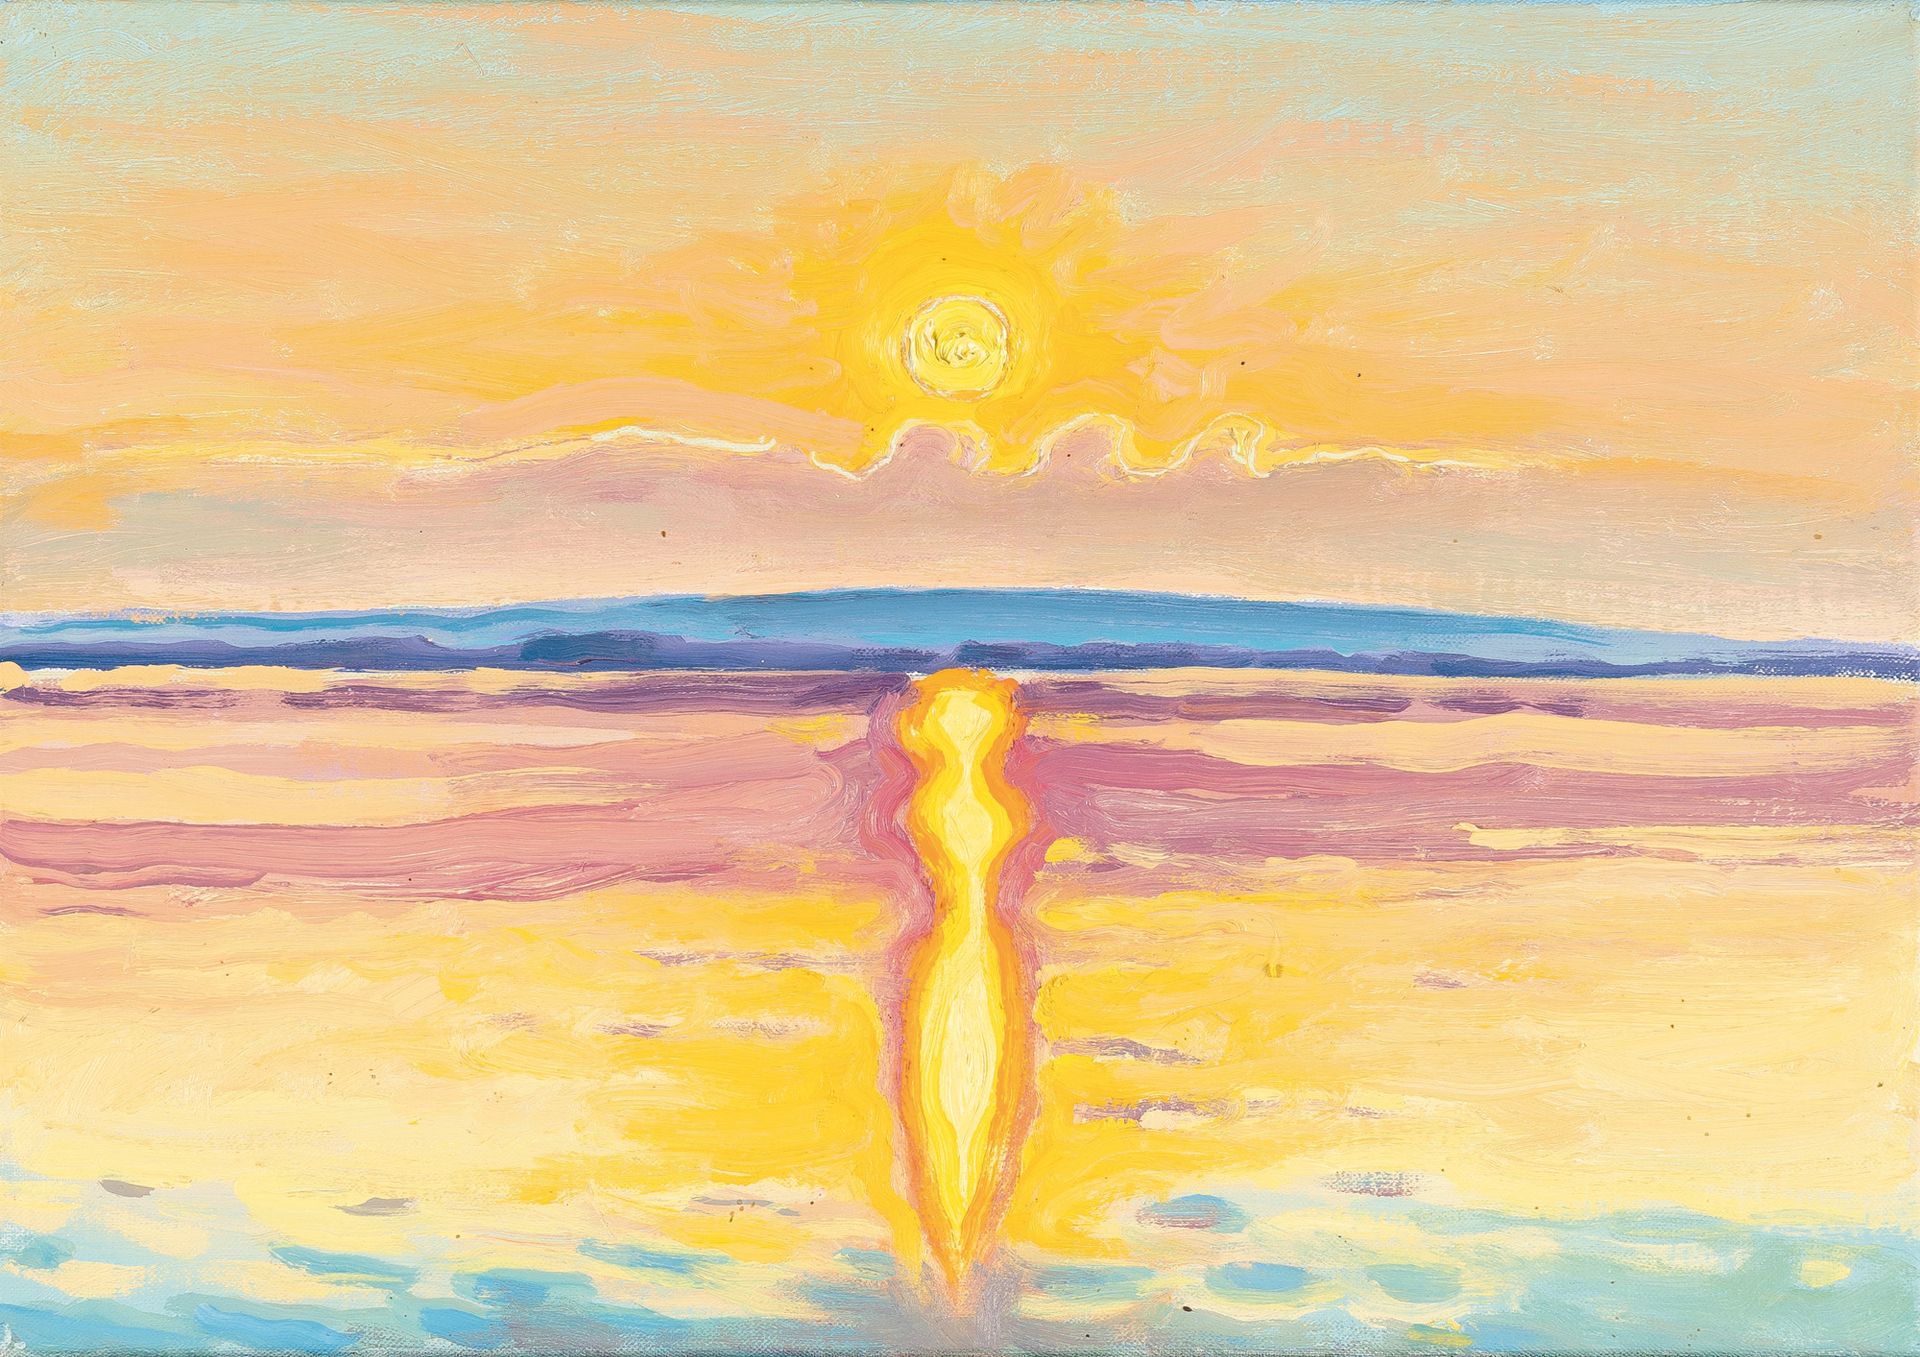 Jean-Frédéric Schnyder 让-弗雷德里克-施奈德，《楚格湖畔的日落》（49）。

布面油画。1996年。约21 x 30厘米。在画布的一侧有&hellip;